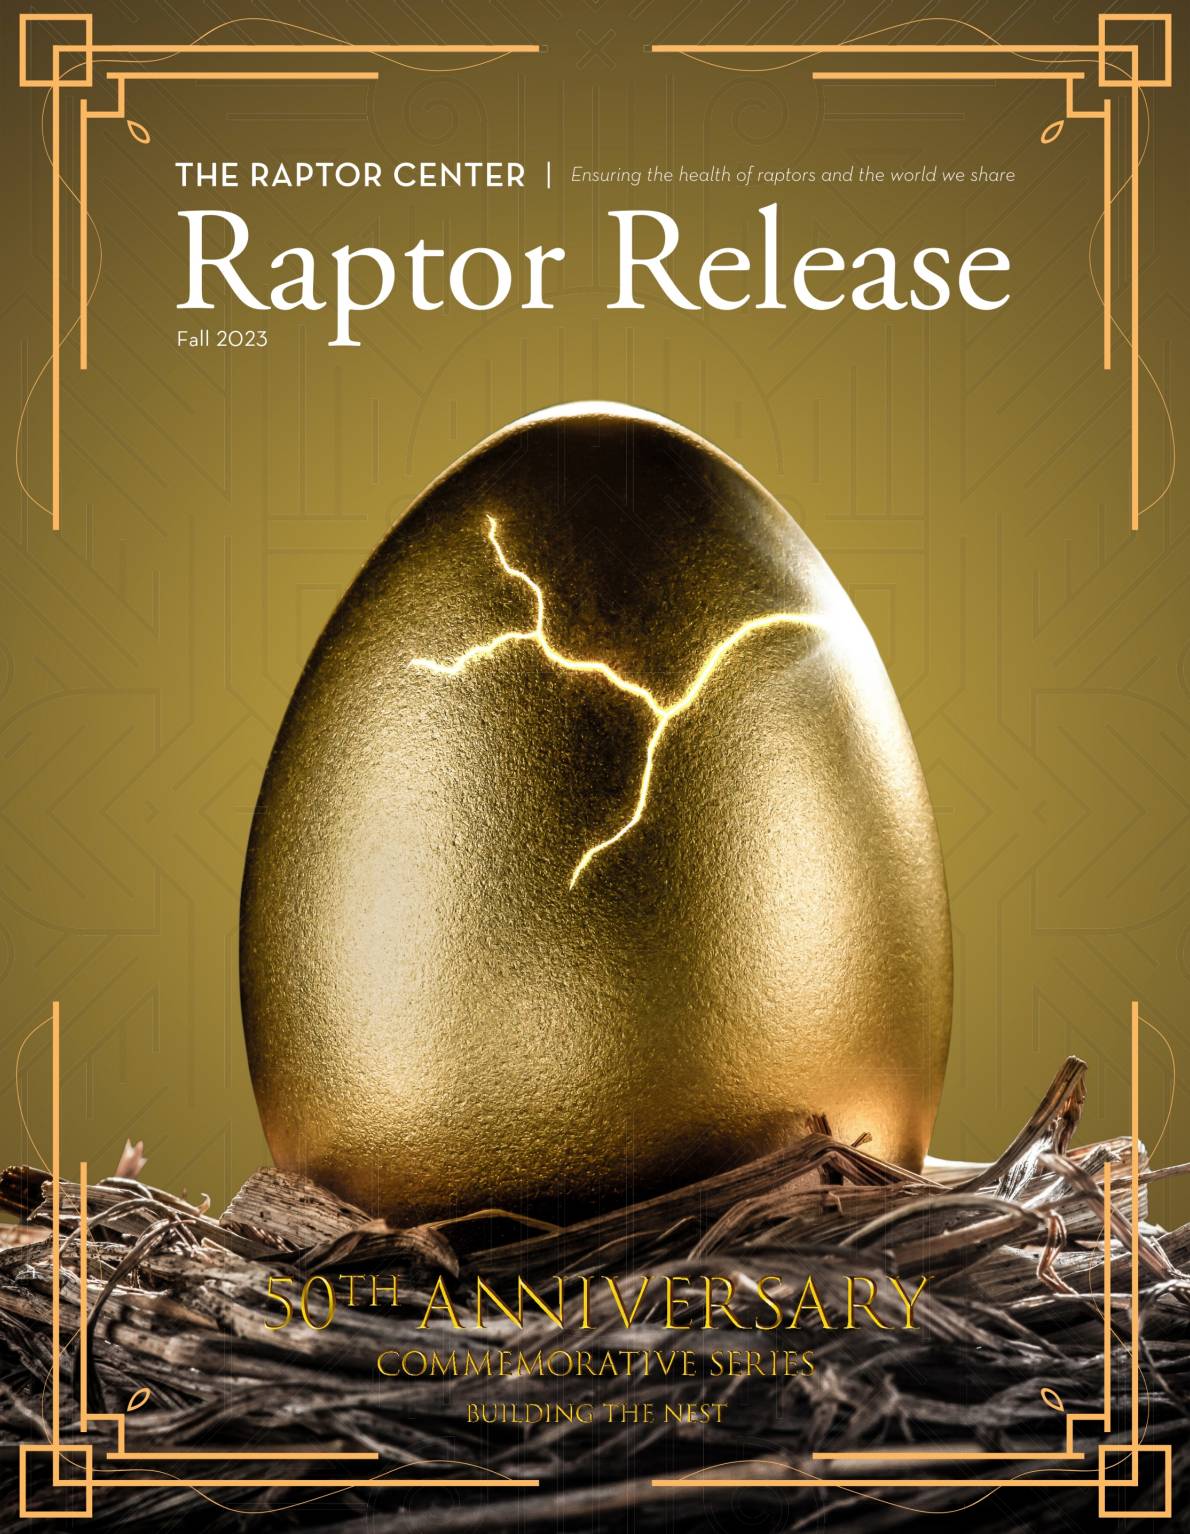 Raptor Release Image for testing